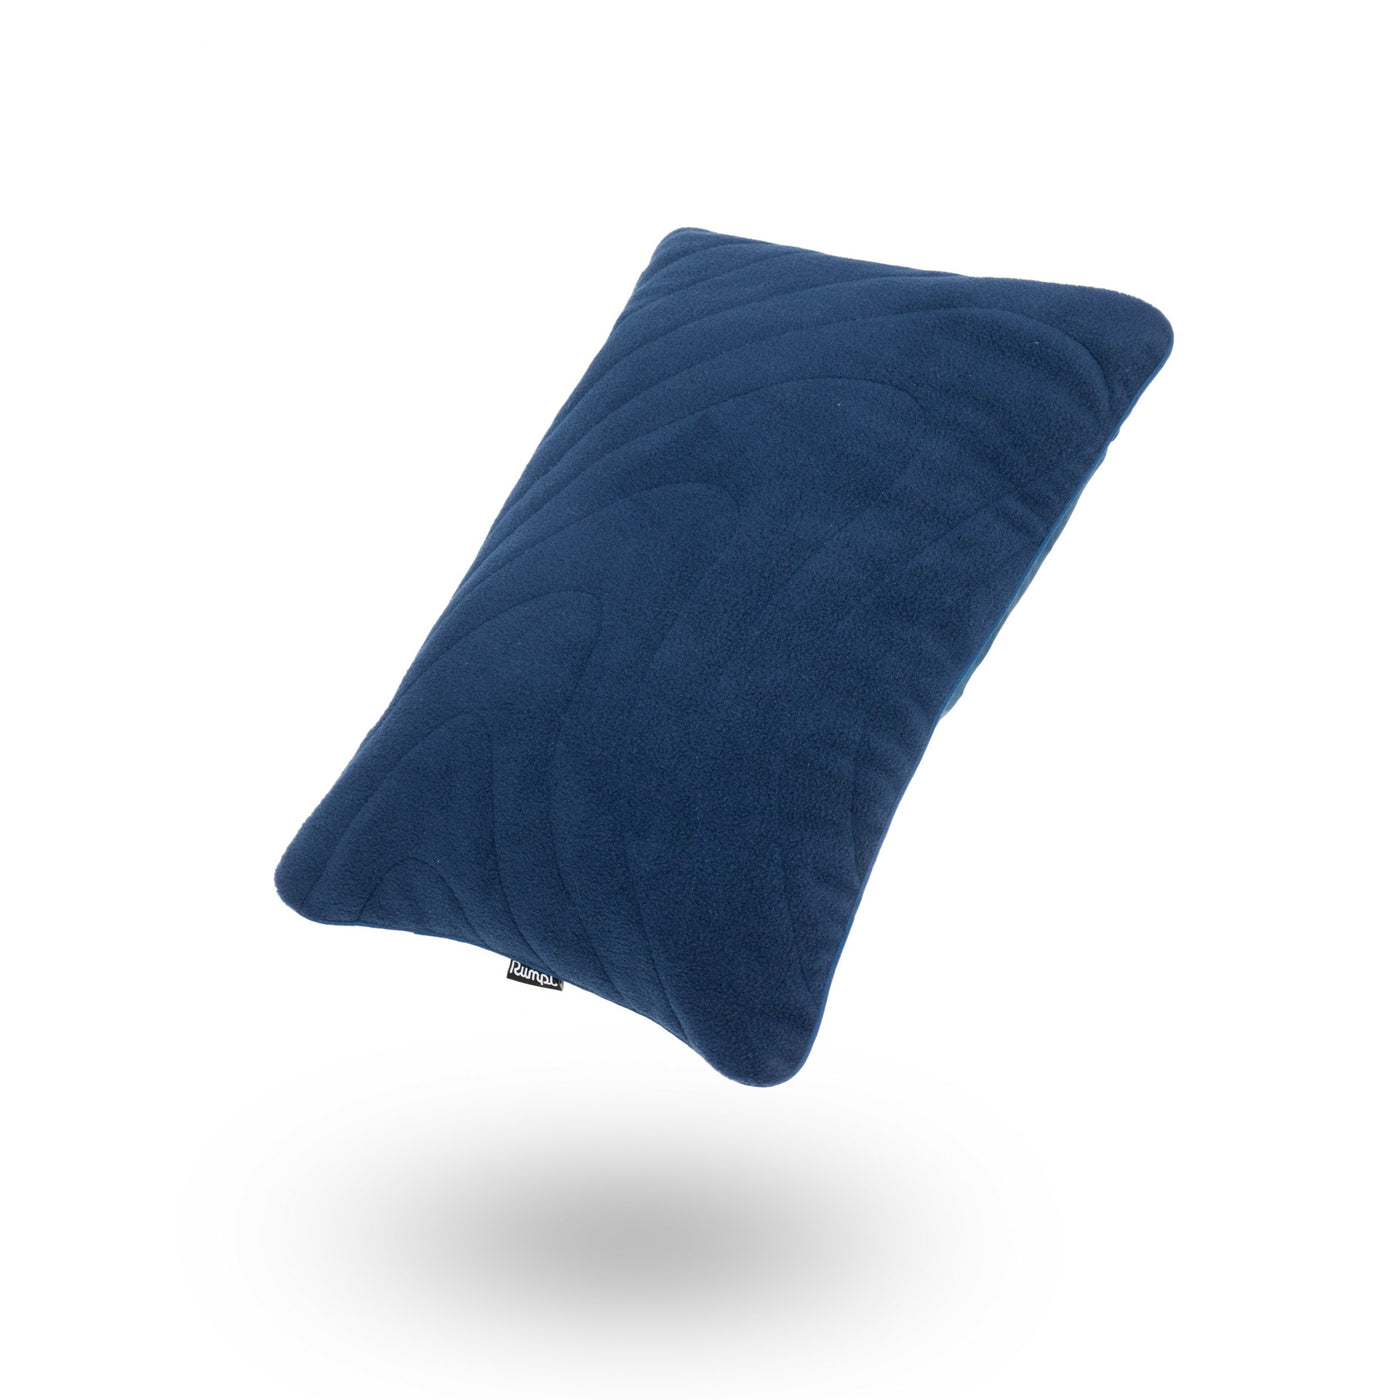 Rumpl | The Stuffable Pillowcase - Deepwater | One Size |  | Stuffable Pillow